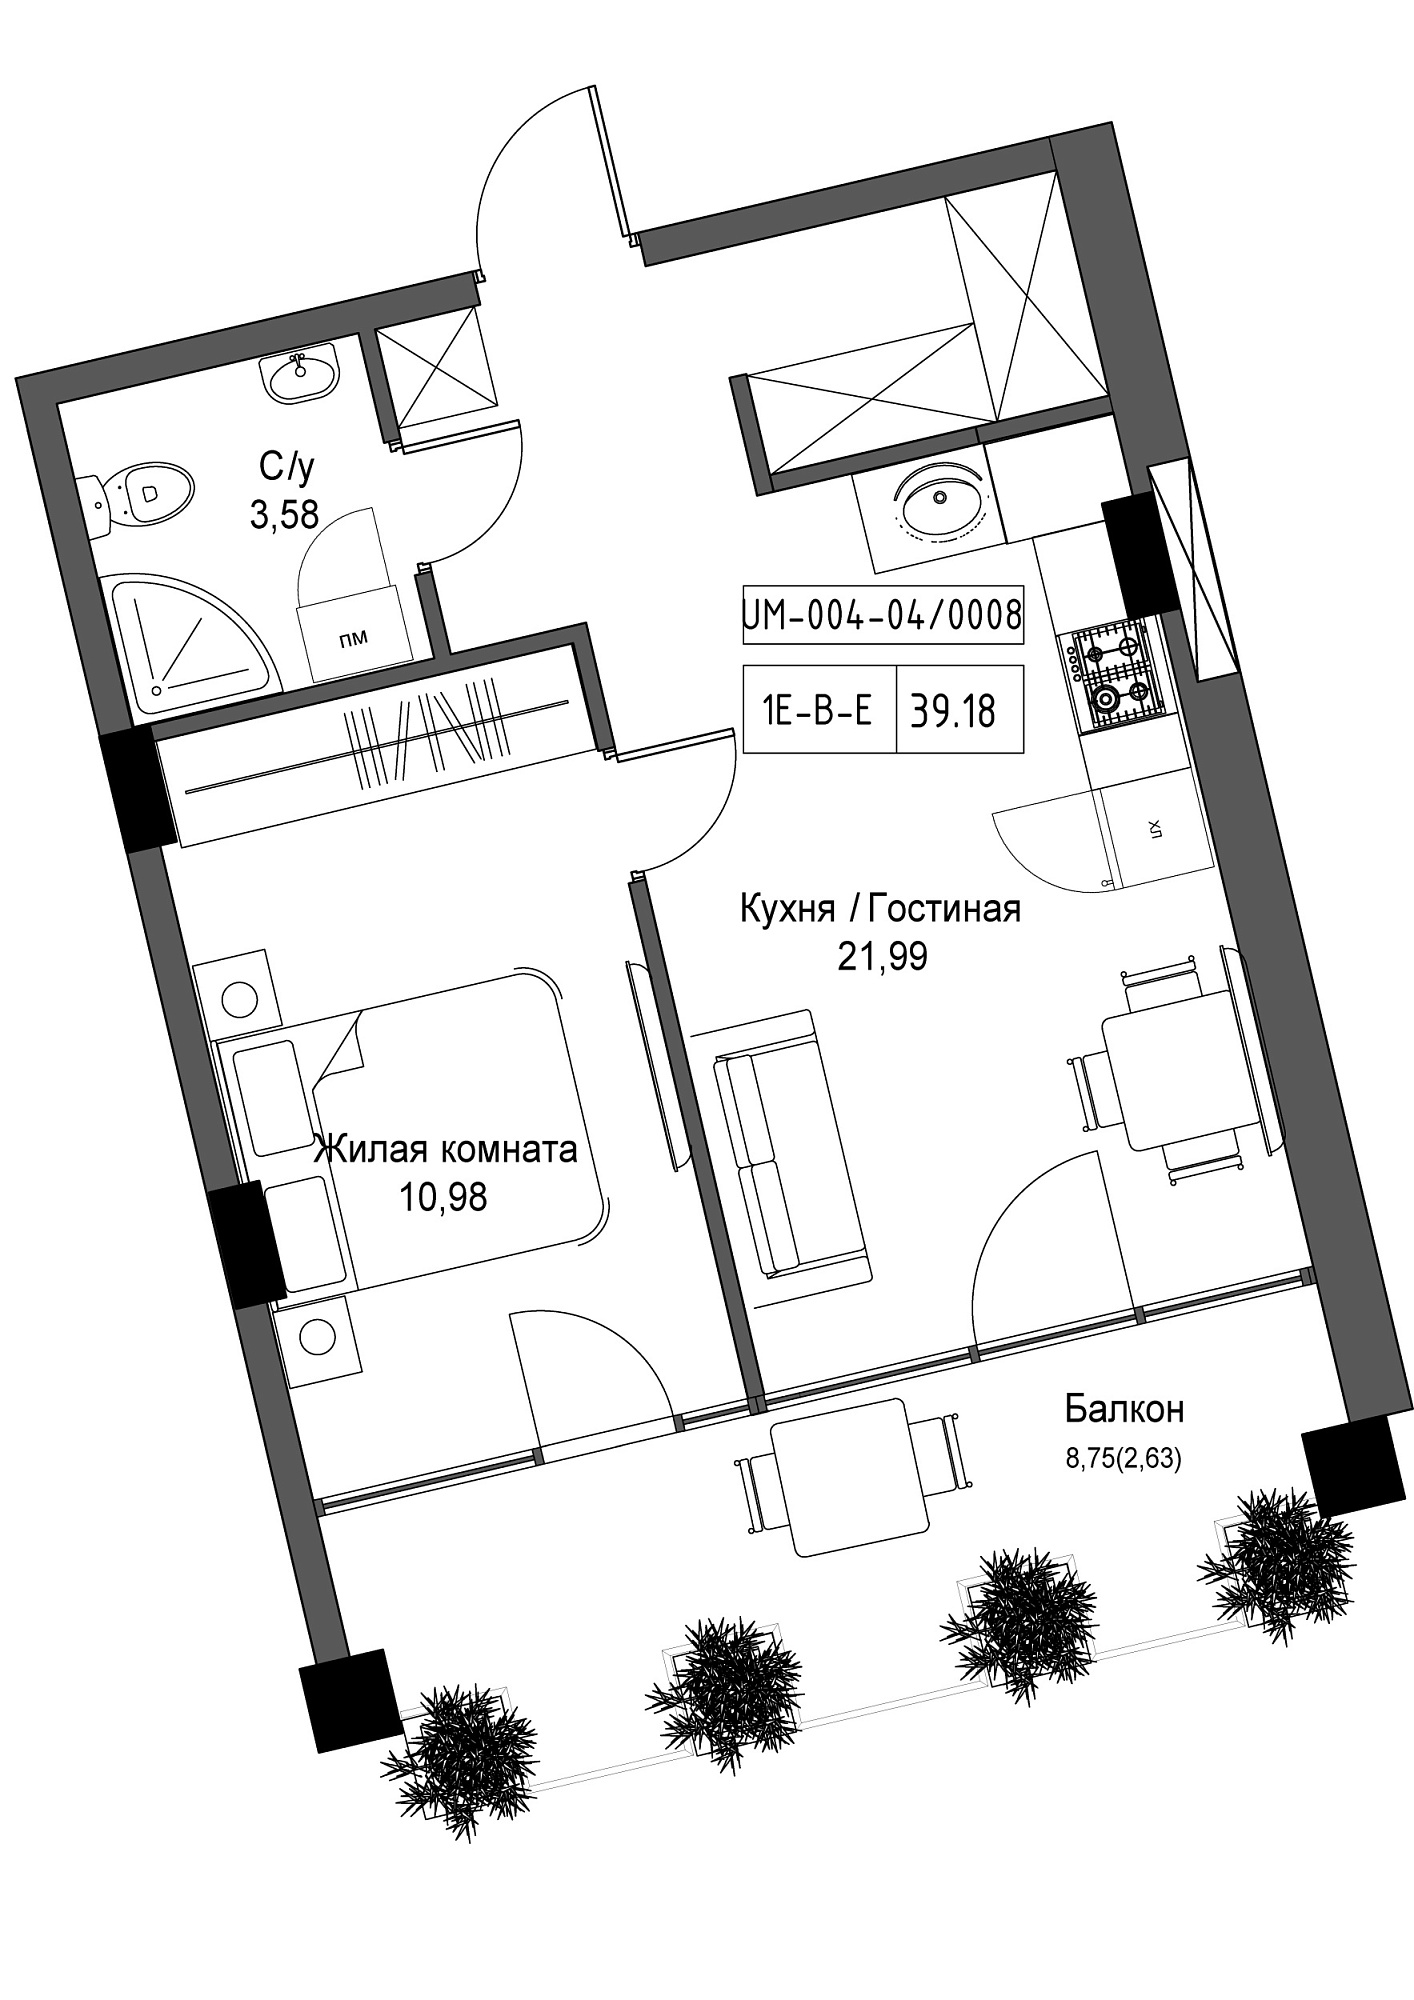 Planning 1-rm flats area 39.18m2, UM-004-04/0008.